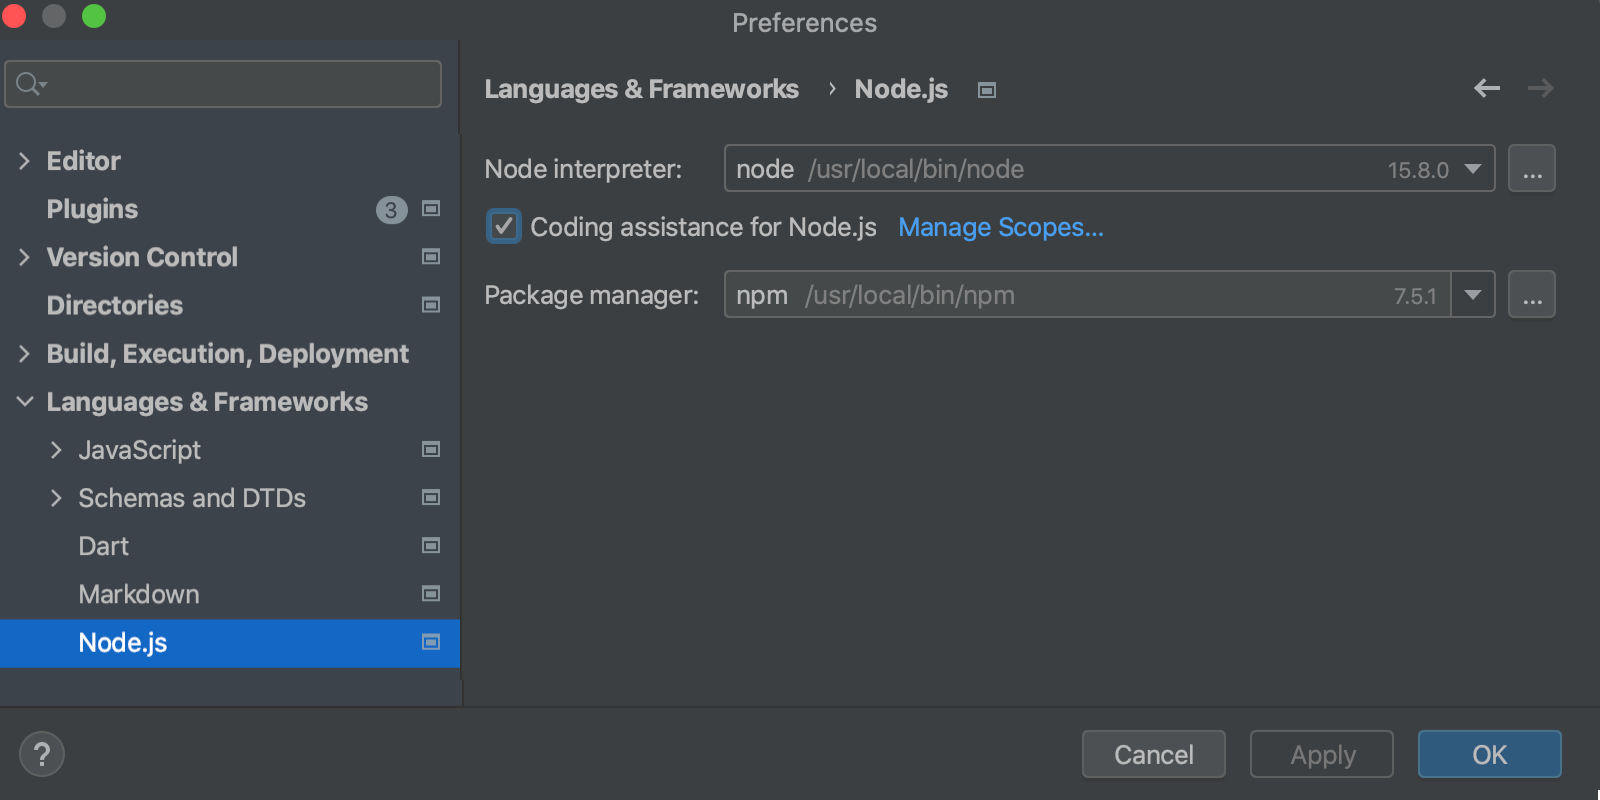 Enable coding assistance for Node.js